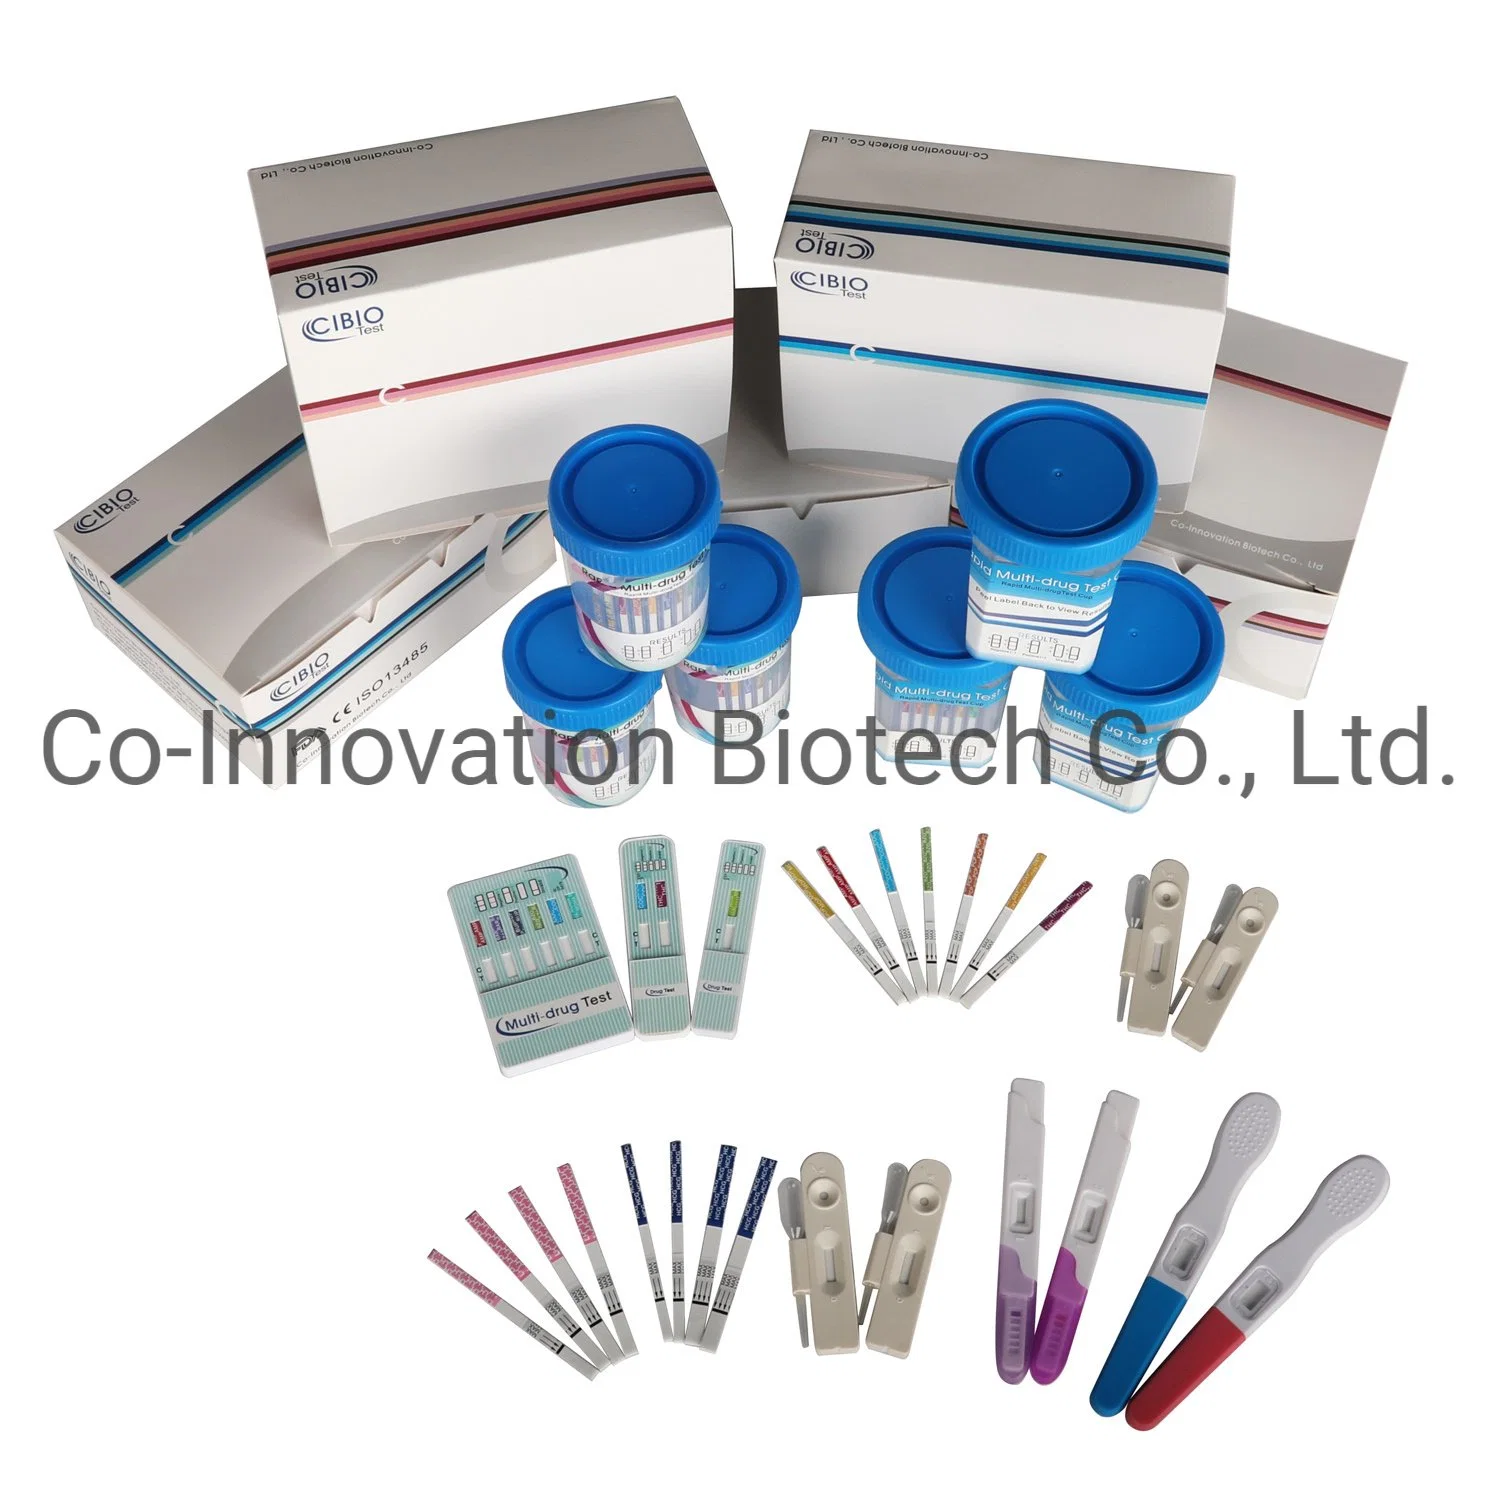 Fabricante chino de oro coloidal productos de diagnóstico in vitro